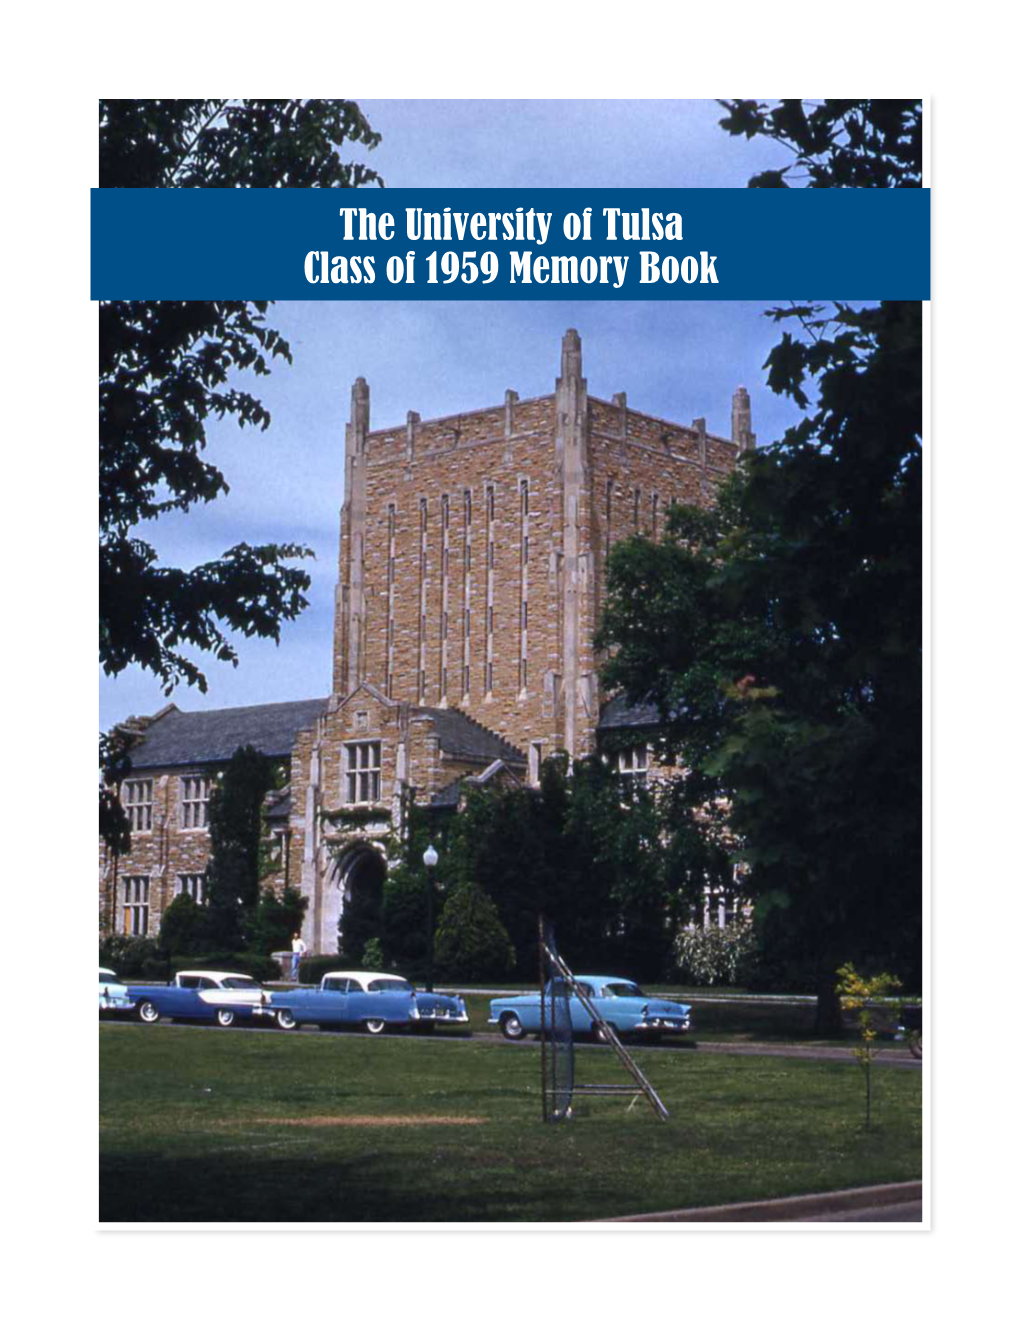 The University of Tulsa Class of 1959 Memory Book in 1959 at TU